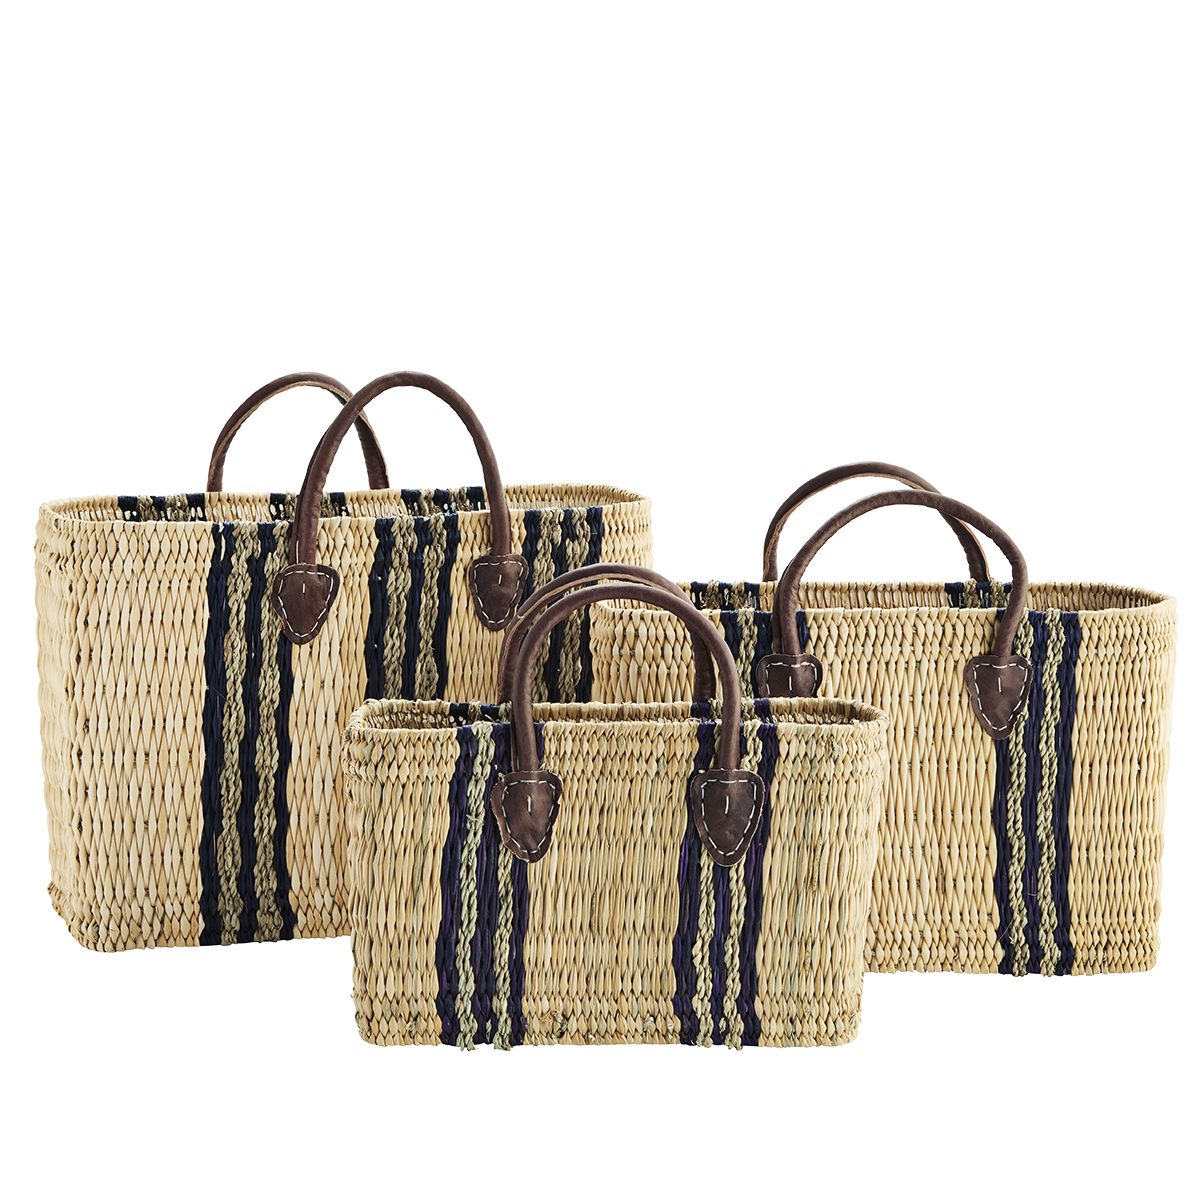 Striped grass bags w/ handles